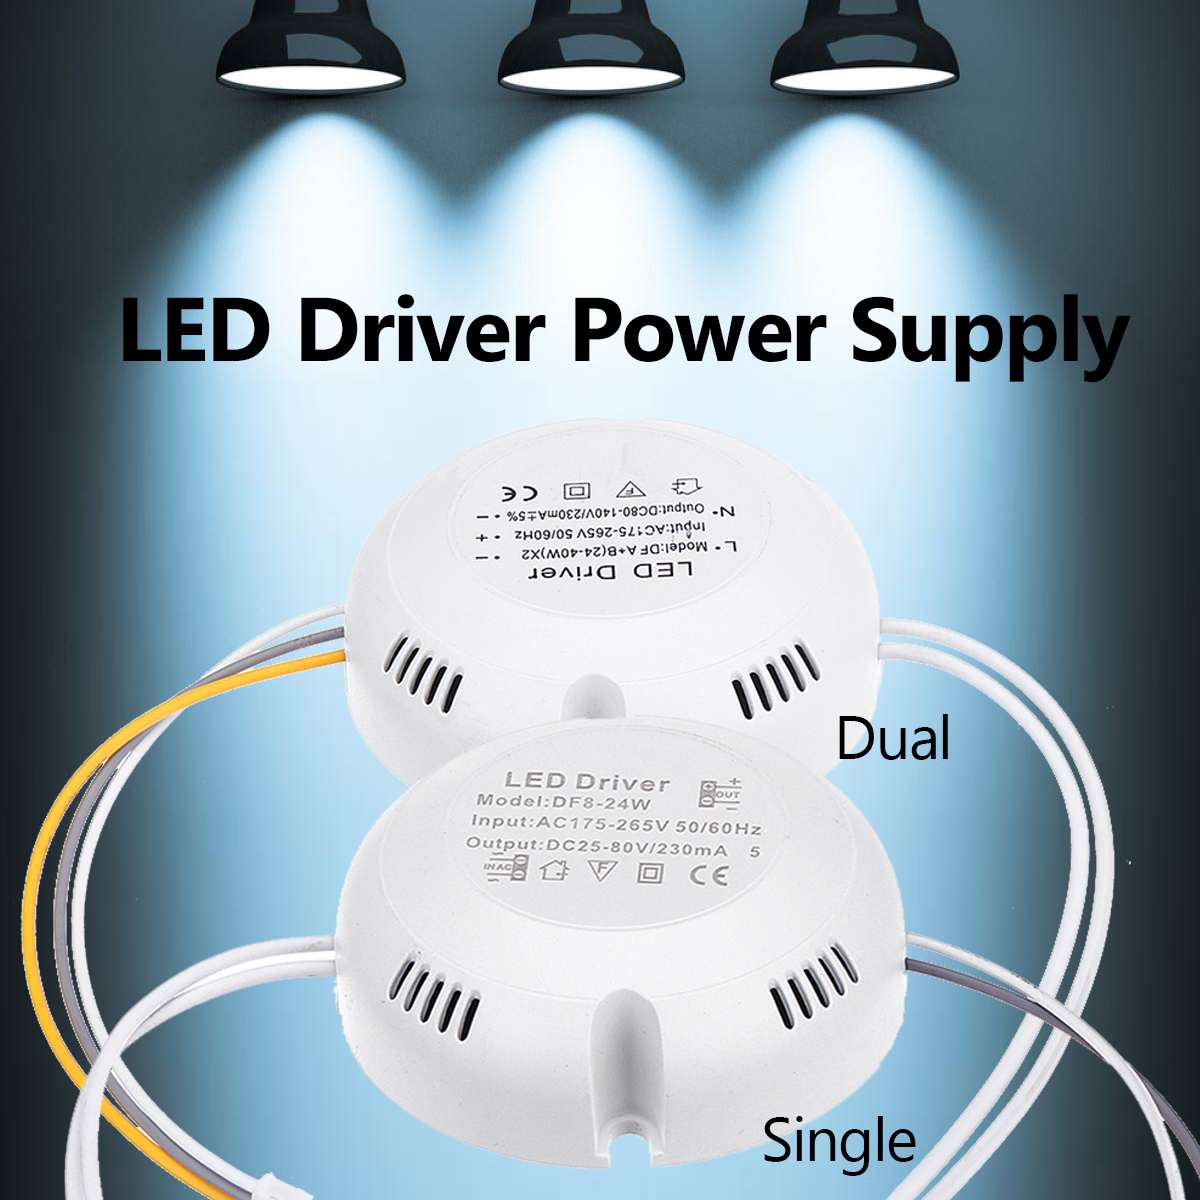 230ma 8-24w/24-36w/12-24w/24-40w led driver strømforsyningsadapter til led lampe panel loft lys belysning transformer